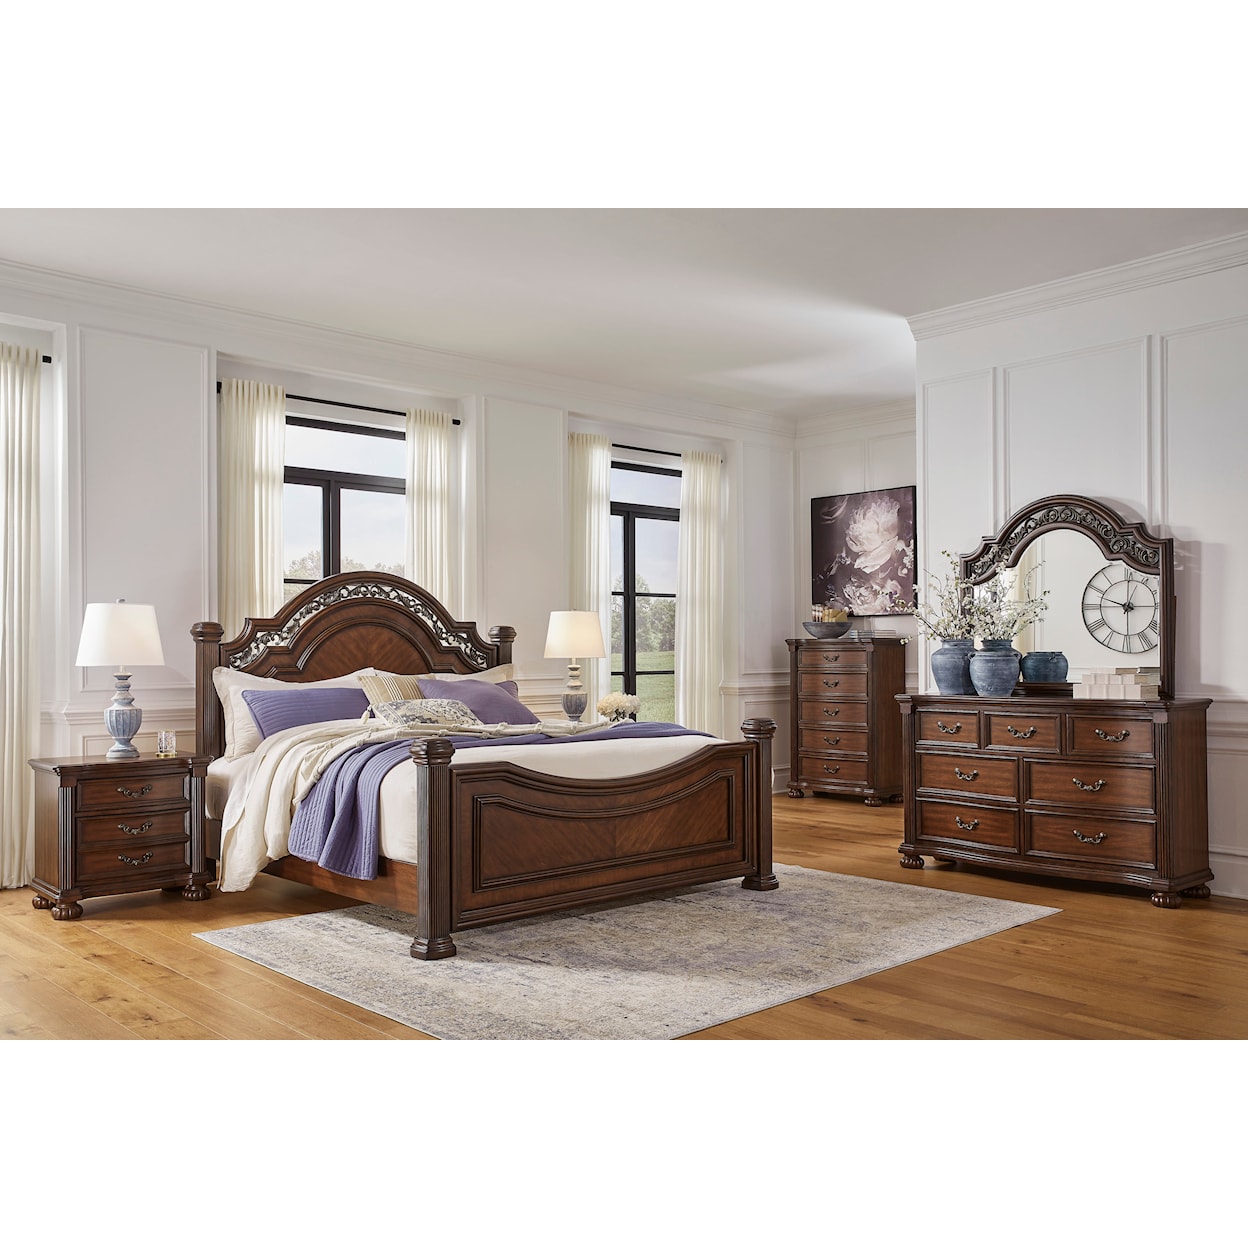 Ashley Furniture Signature Design Lavinton California King Bedroom Set